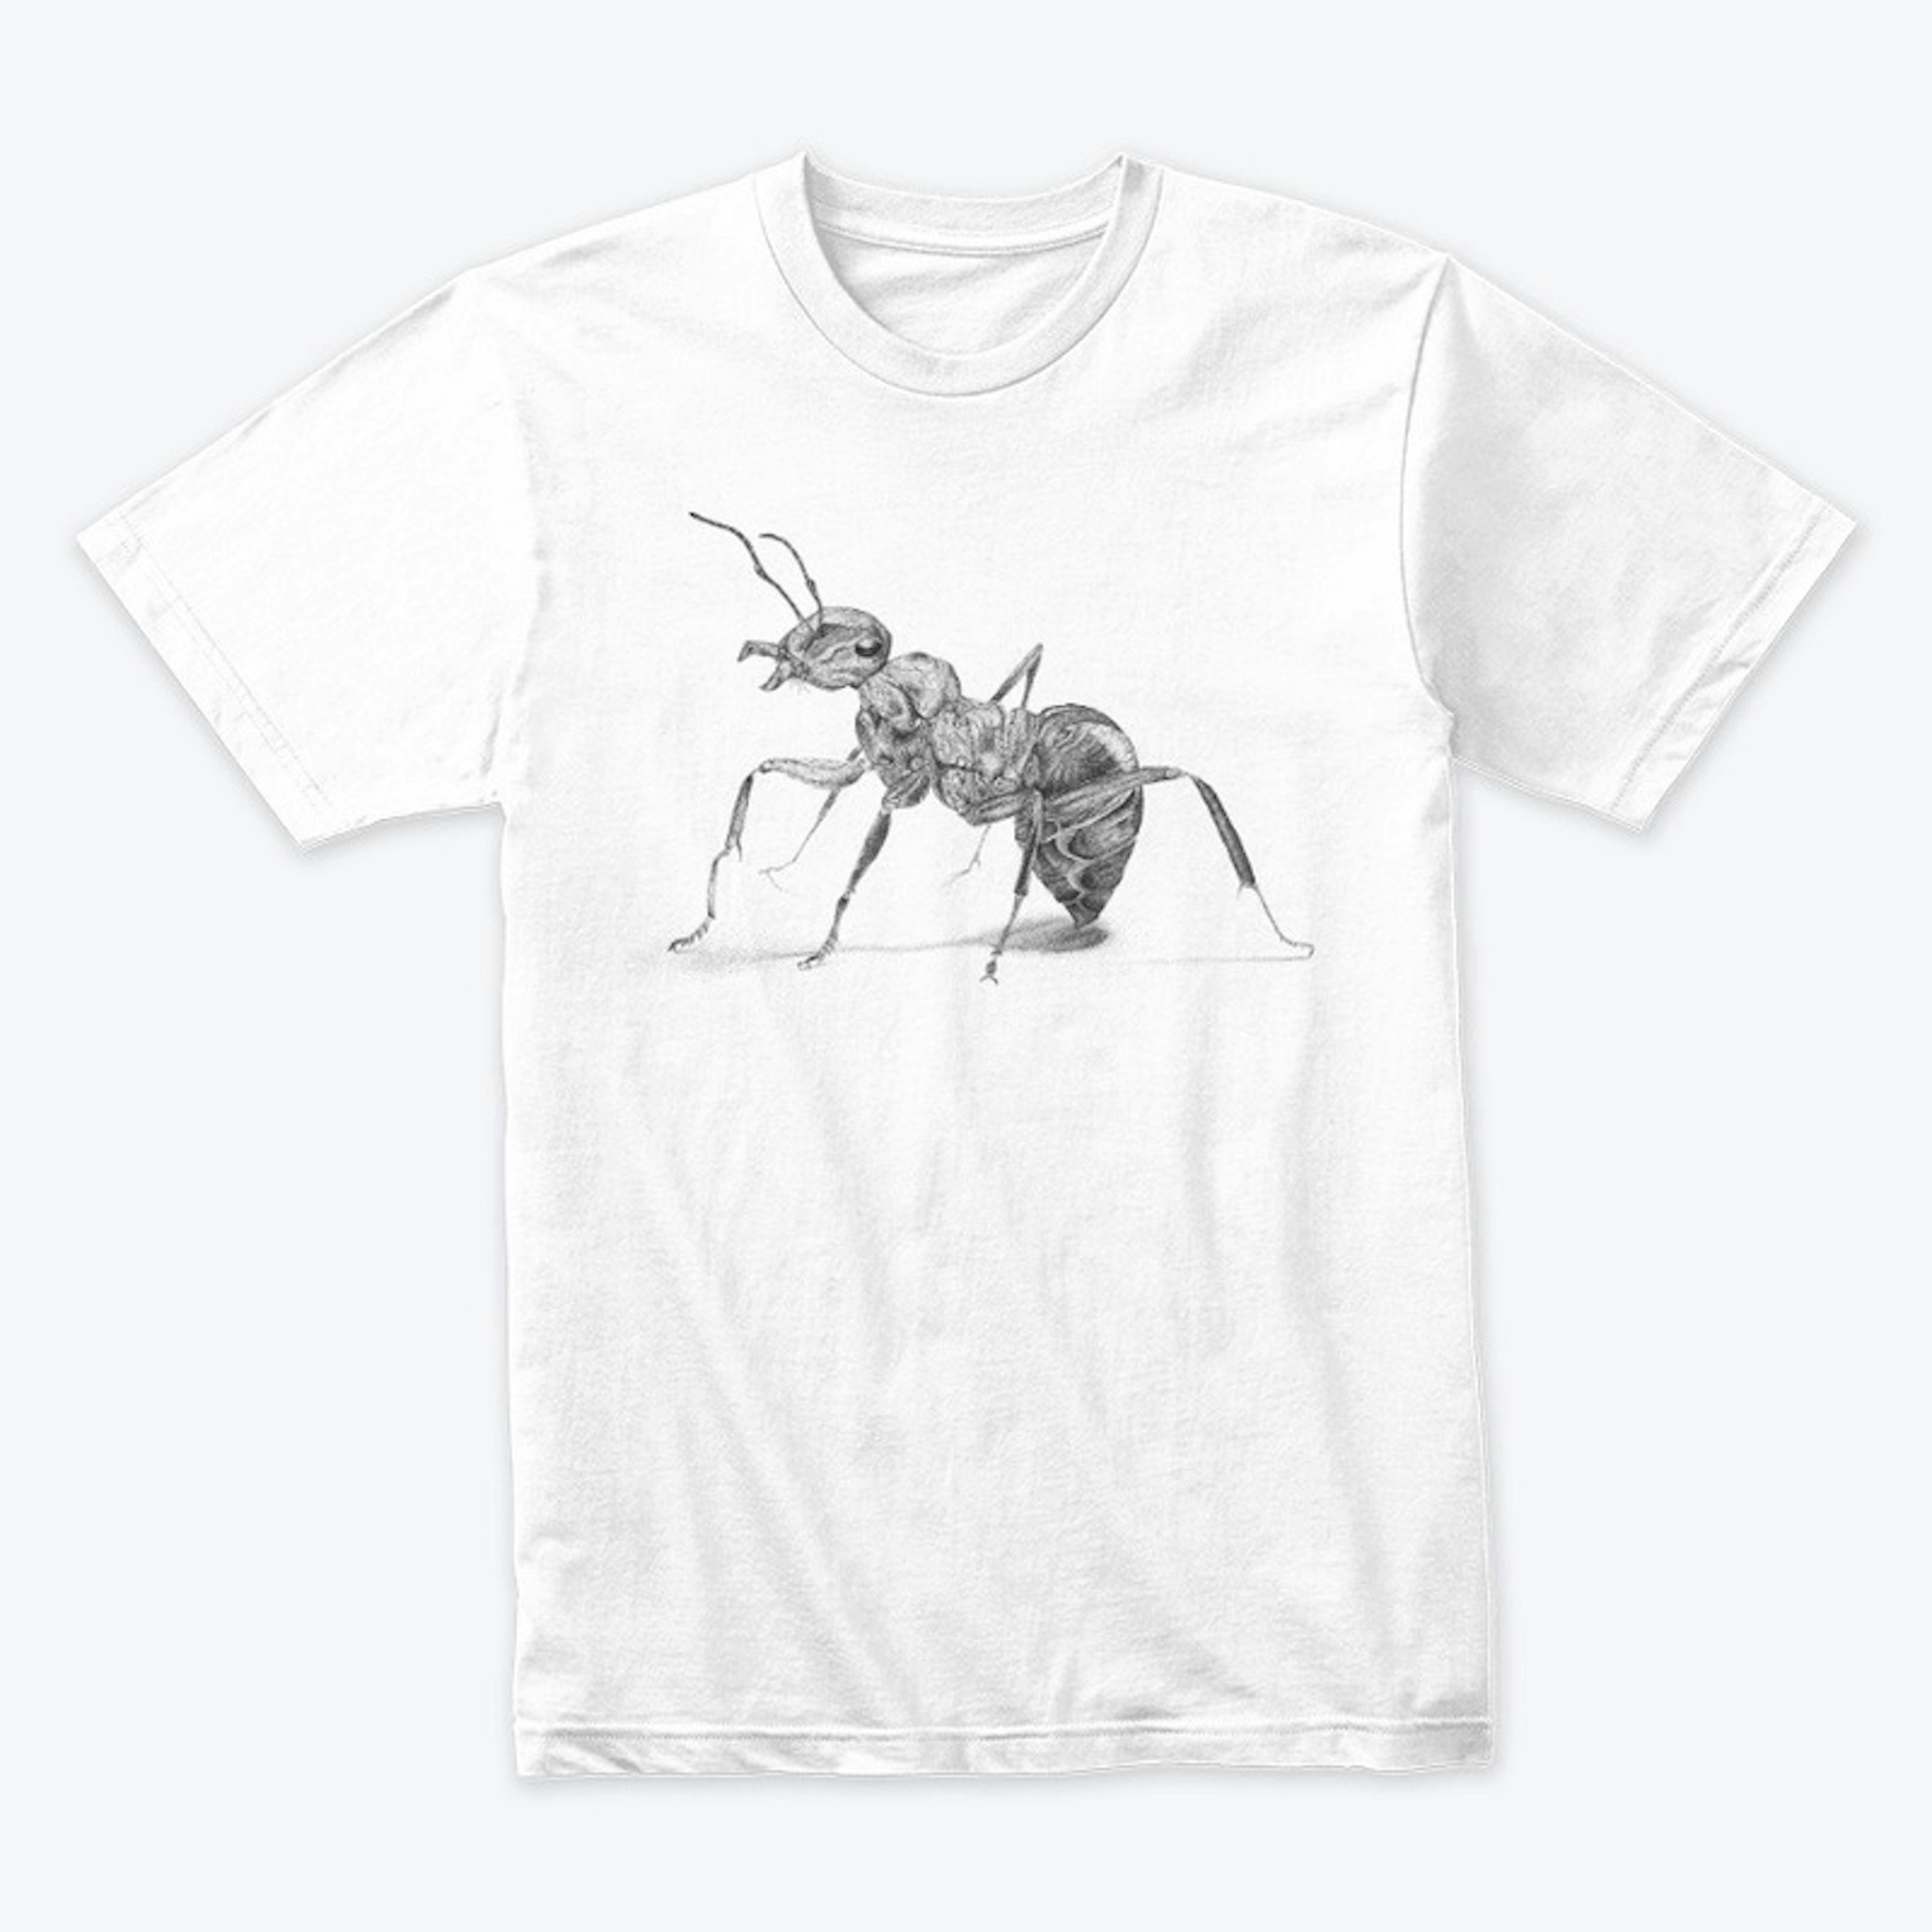 Original ant t-shirt. Pointillism design